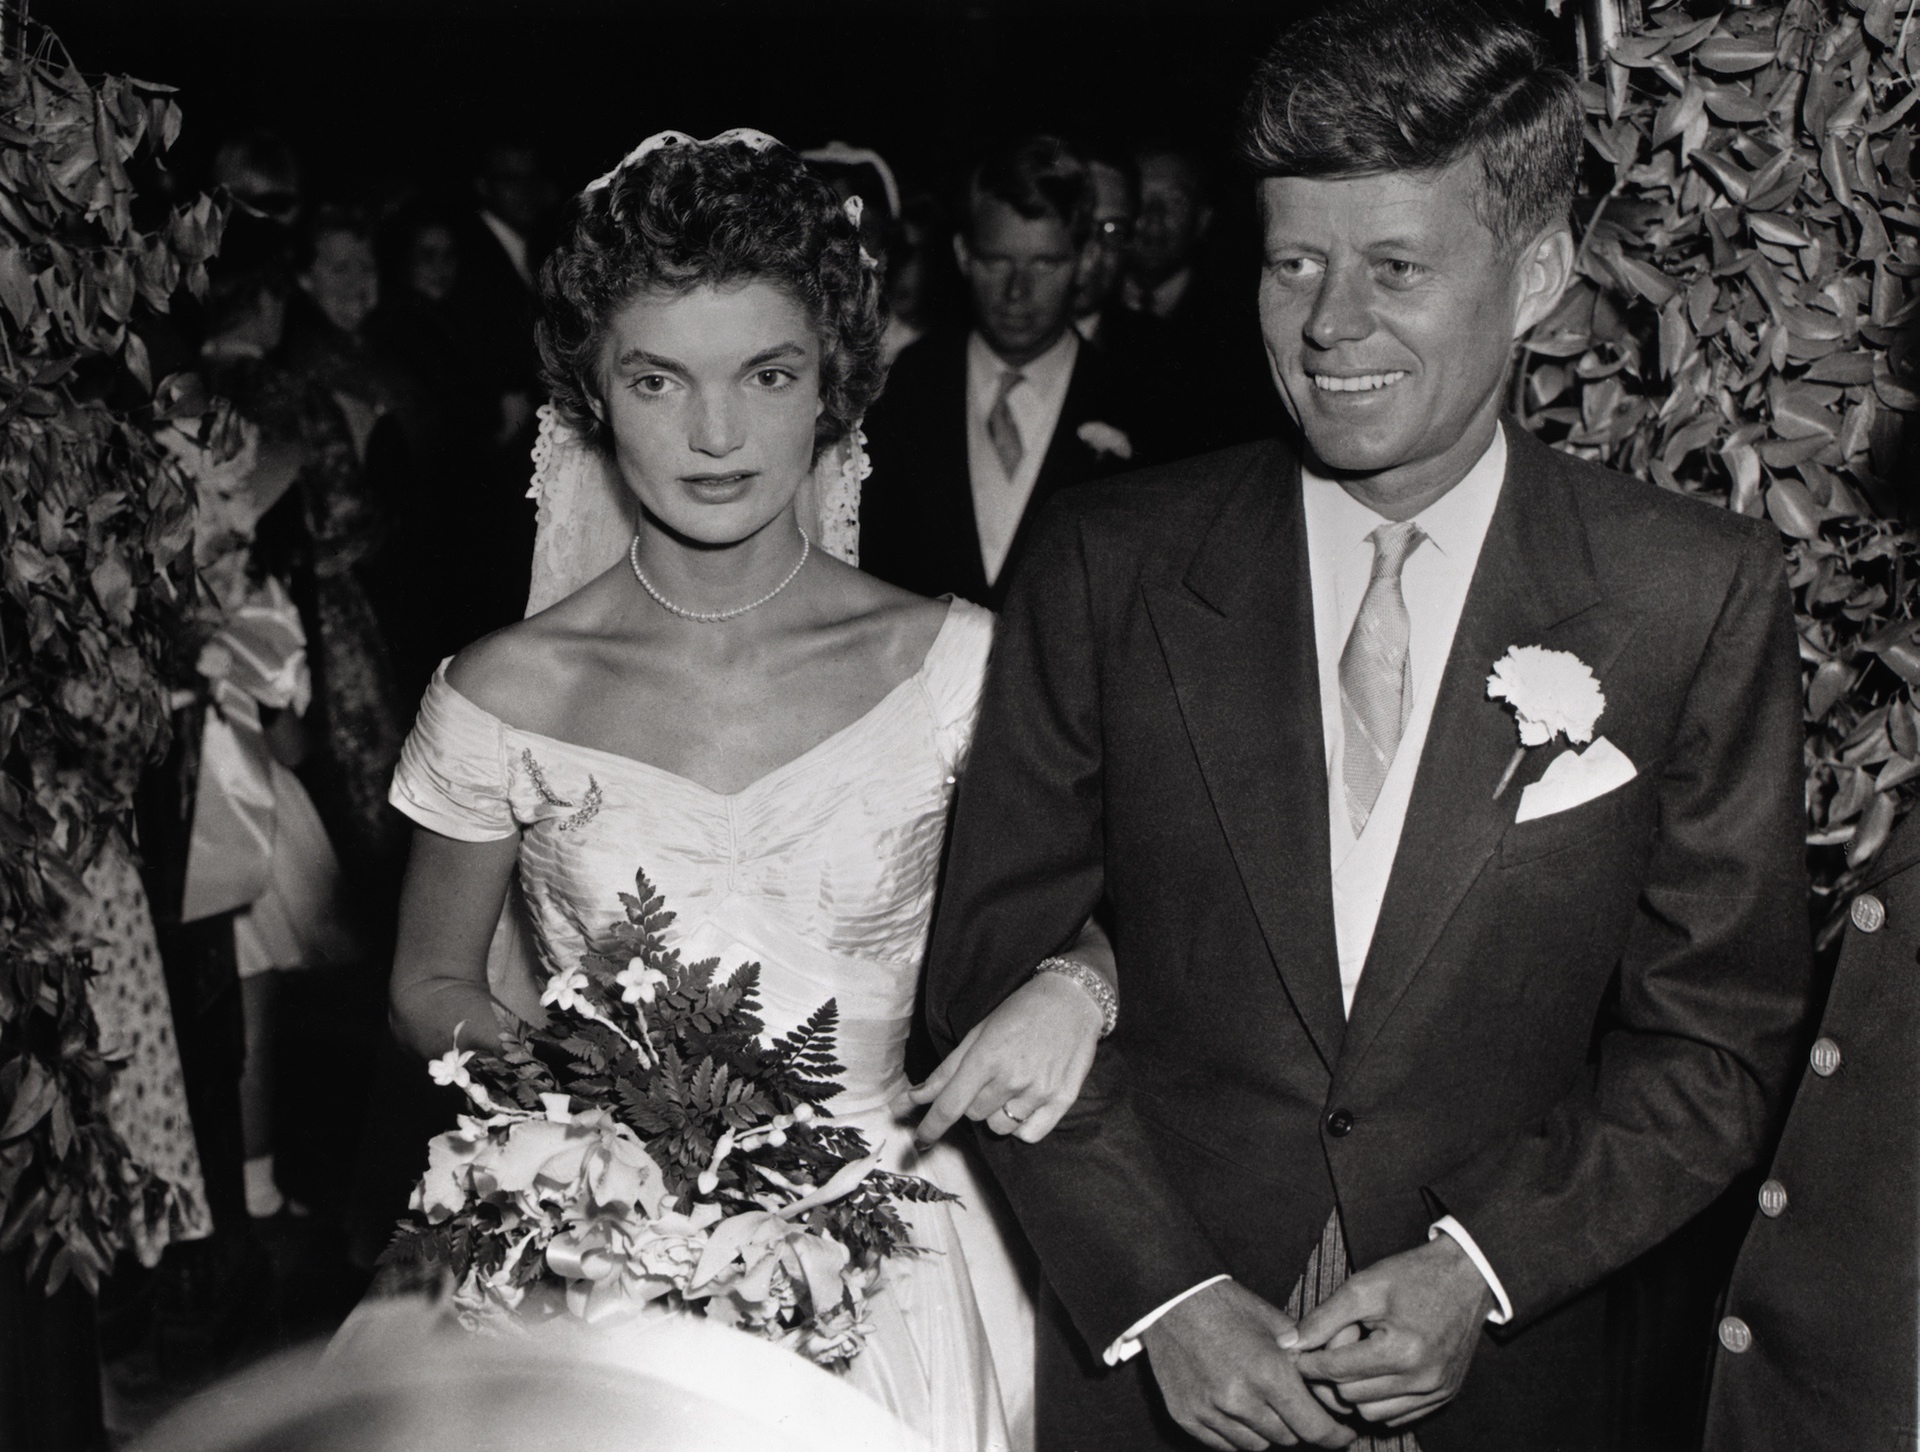 Jacqueline Kennedy's wedding dress